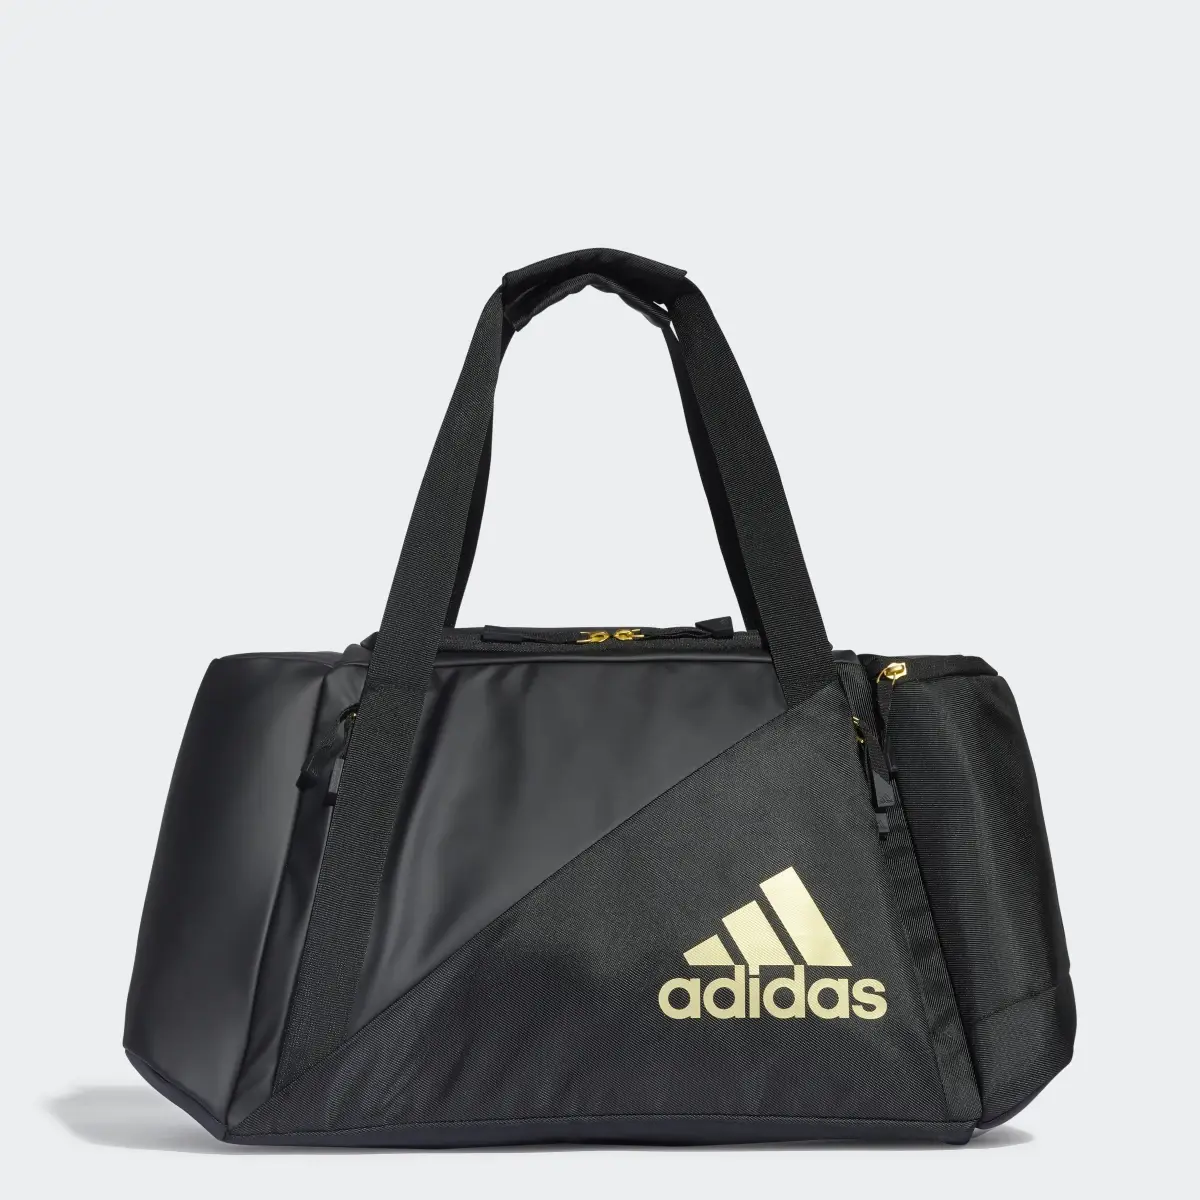 Adidas VS.6 Black/Gold Holdall Bag. 1